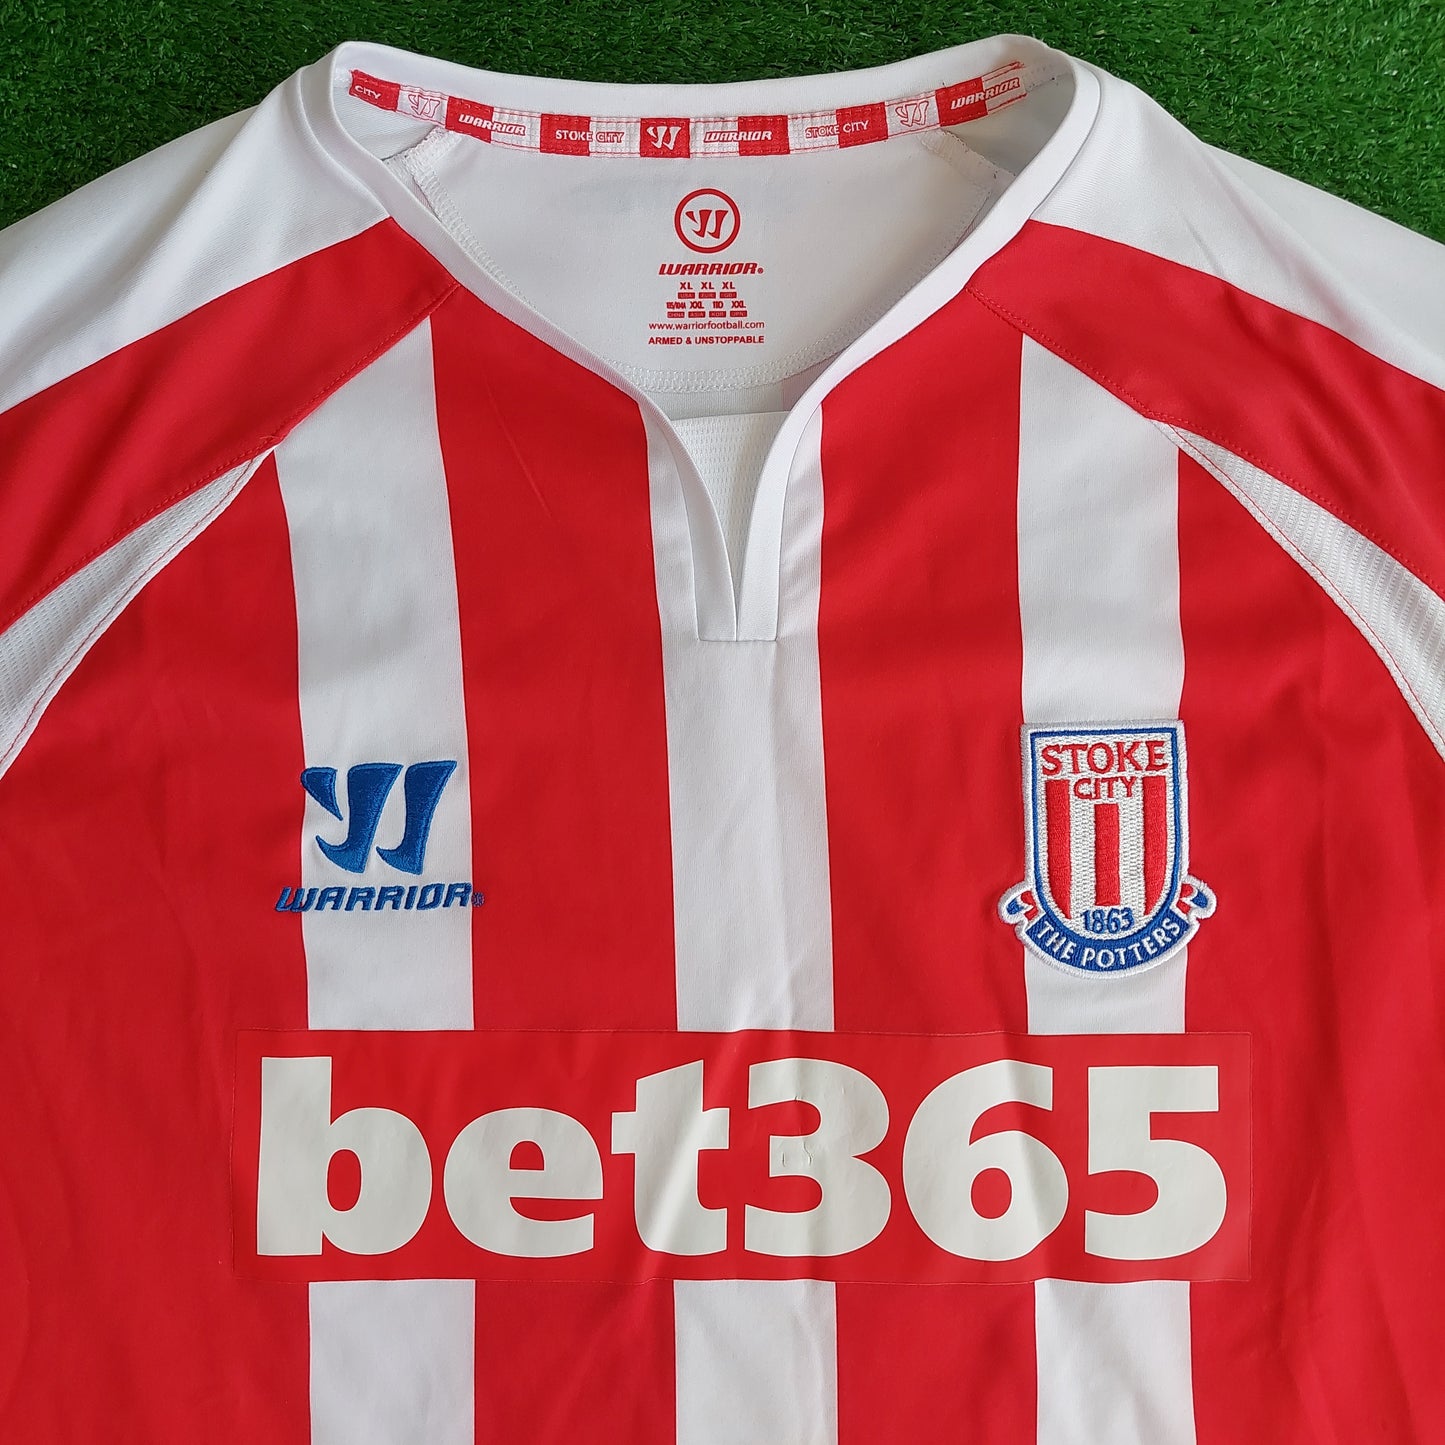 Stoke City 2014/15 Home Shirt (Excellent) - Size XL